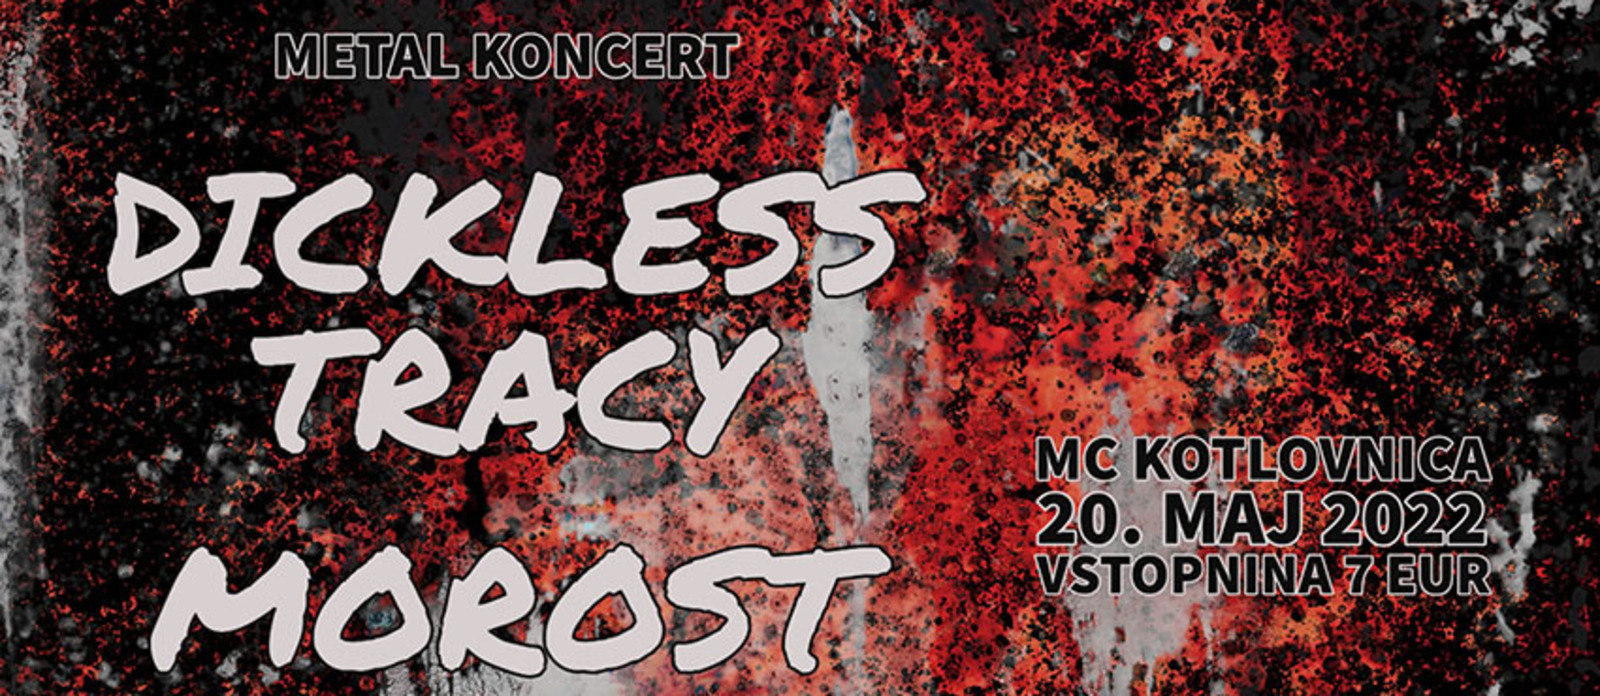 Metal koncert: Dickless Tracy in Morost